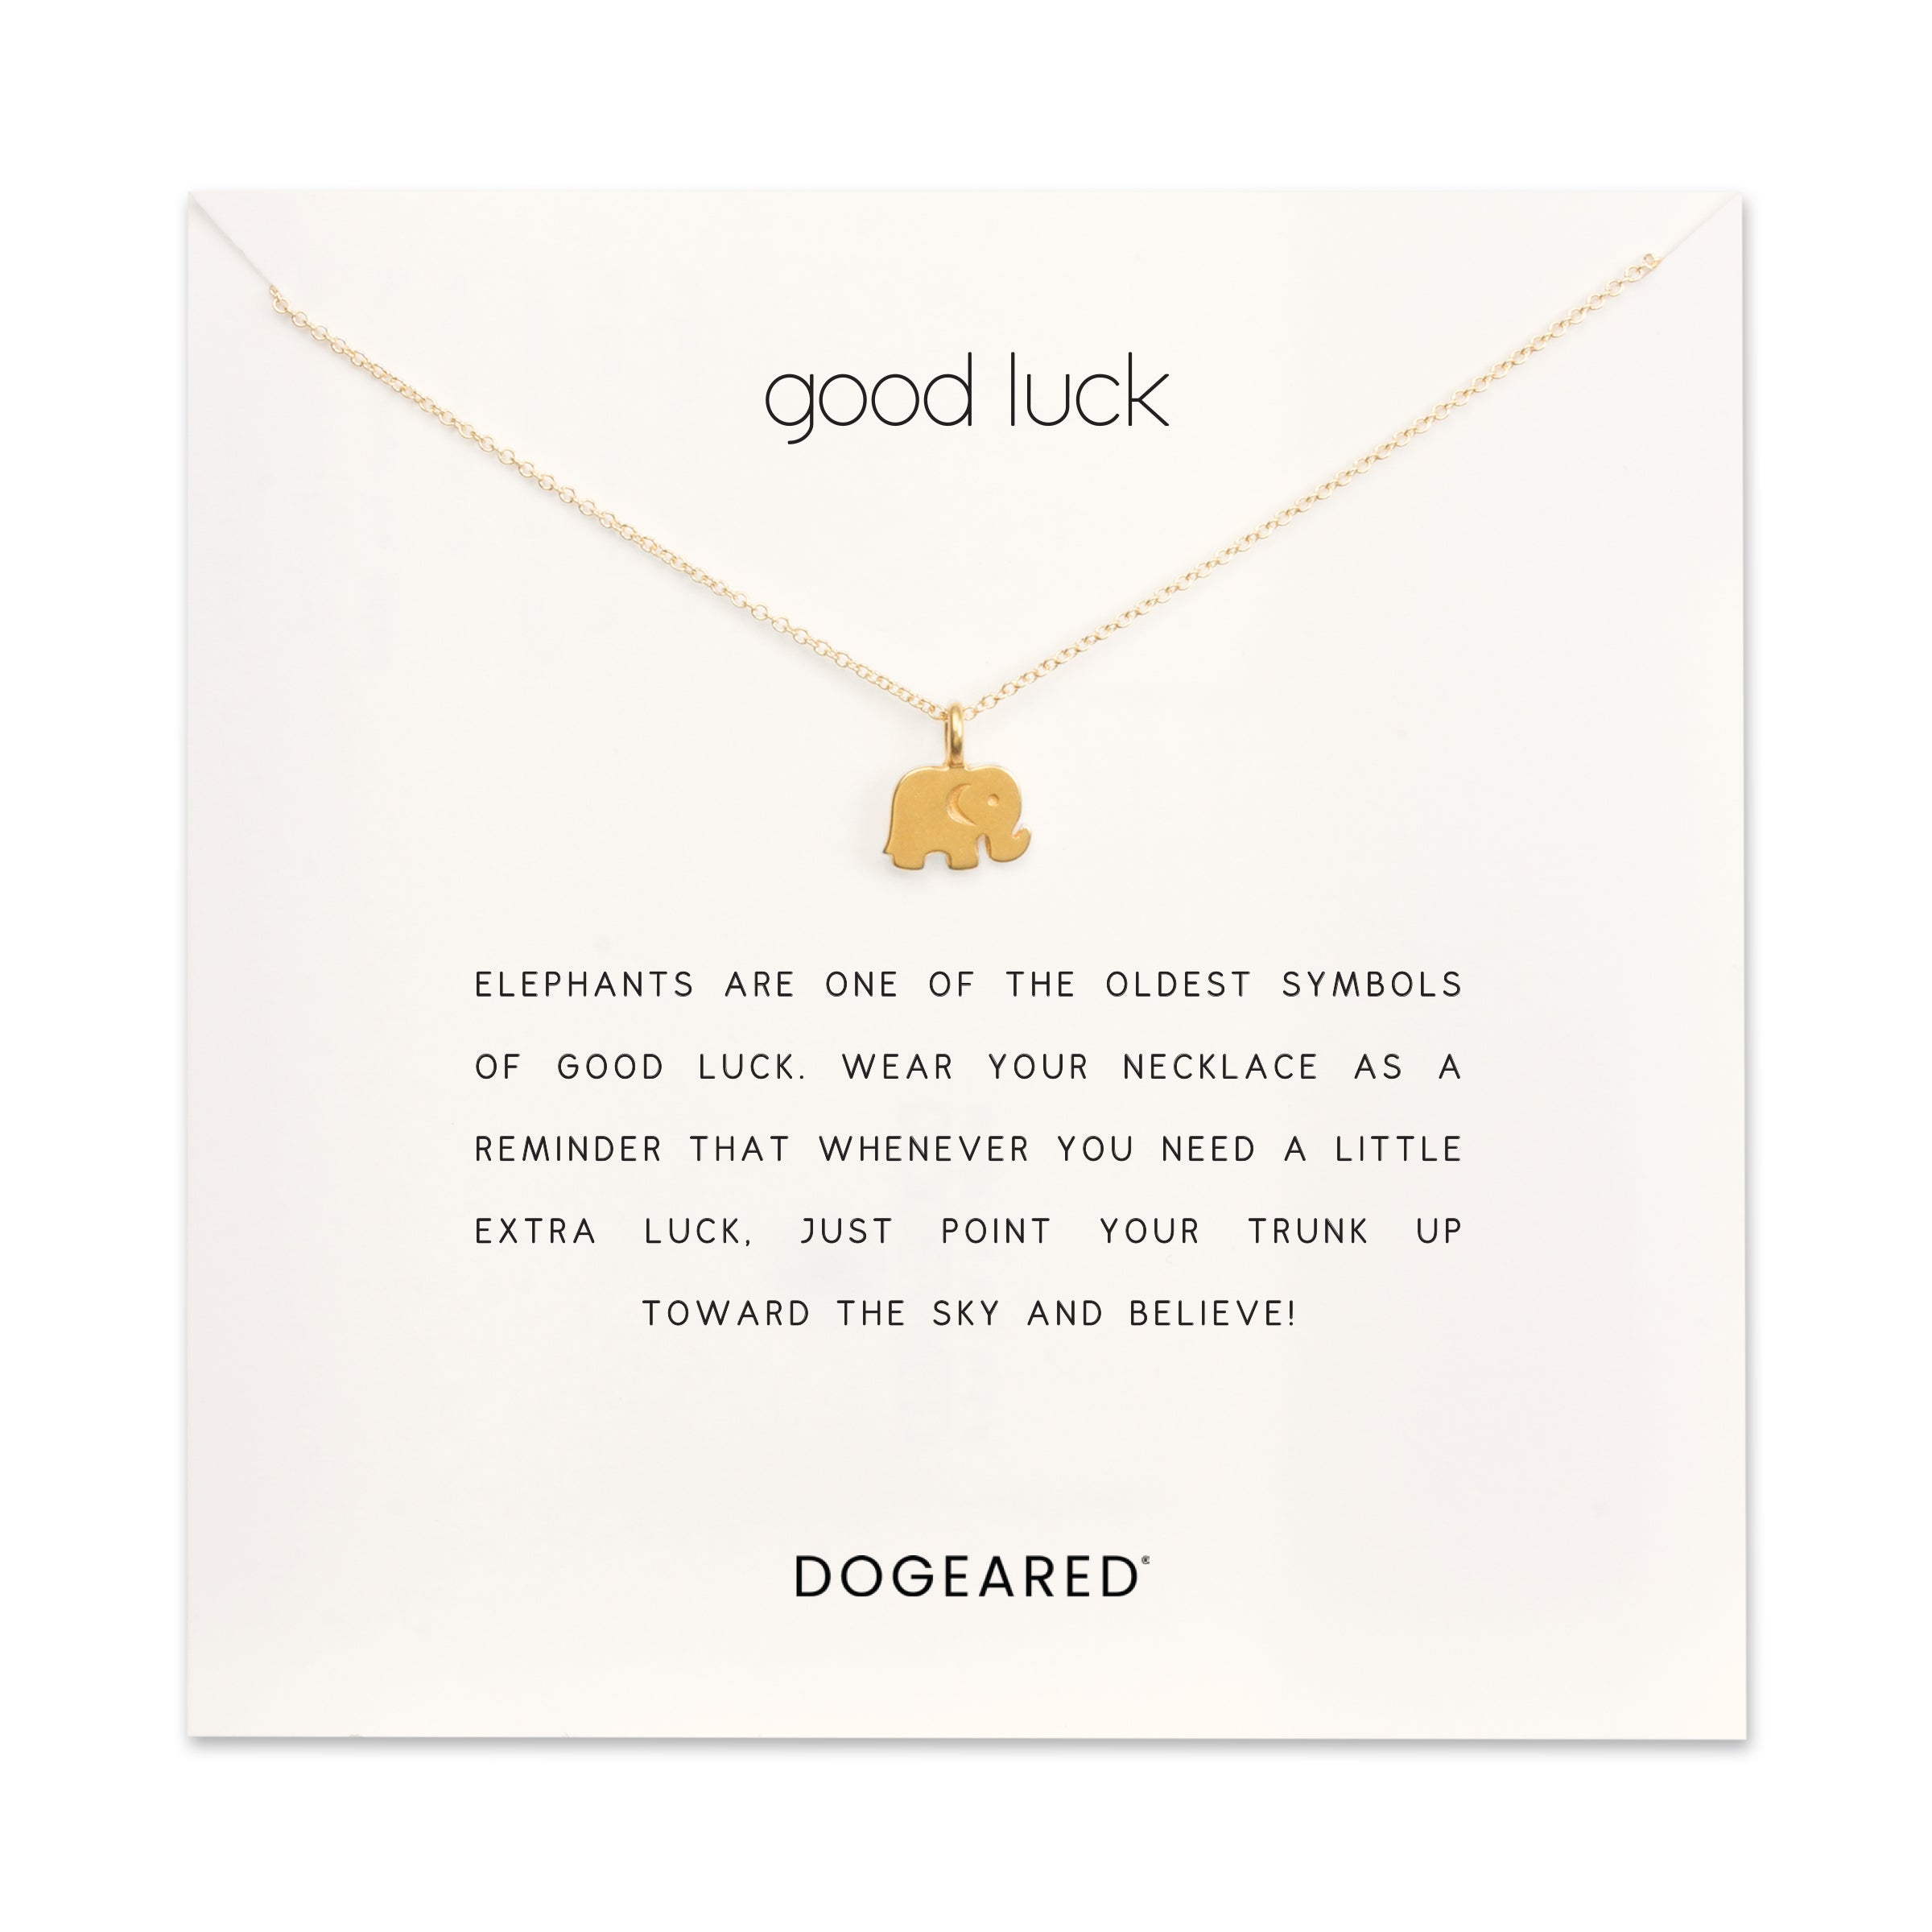 Good luck elephant necklace - Dogeared